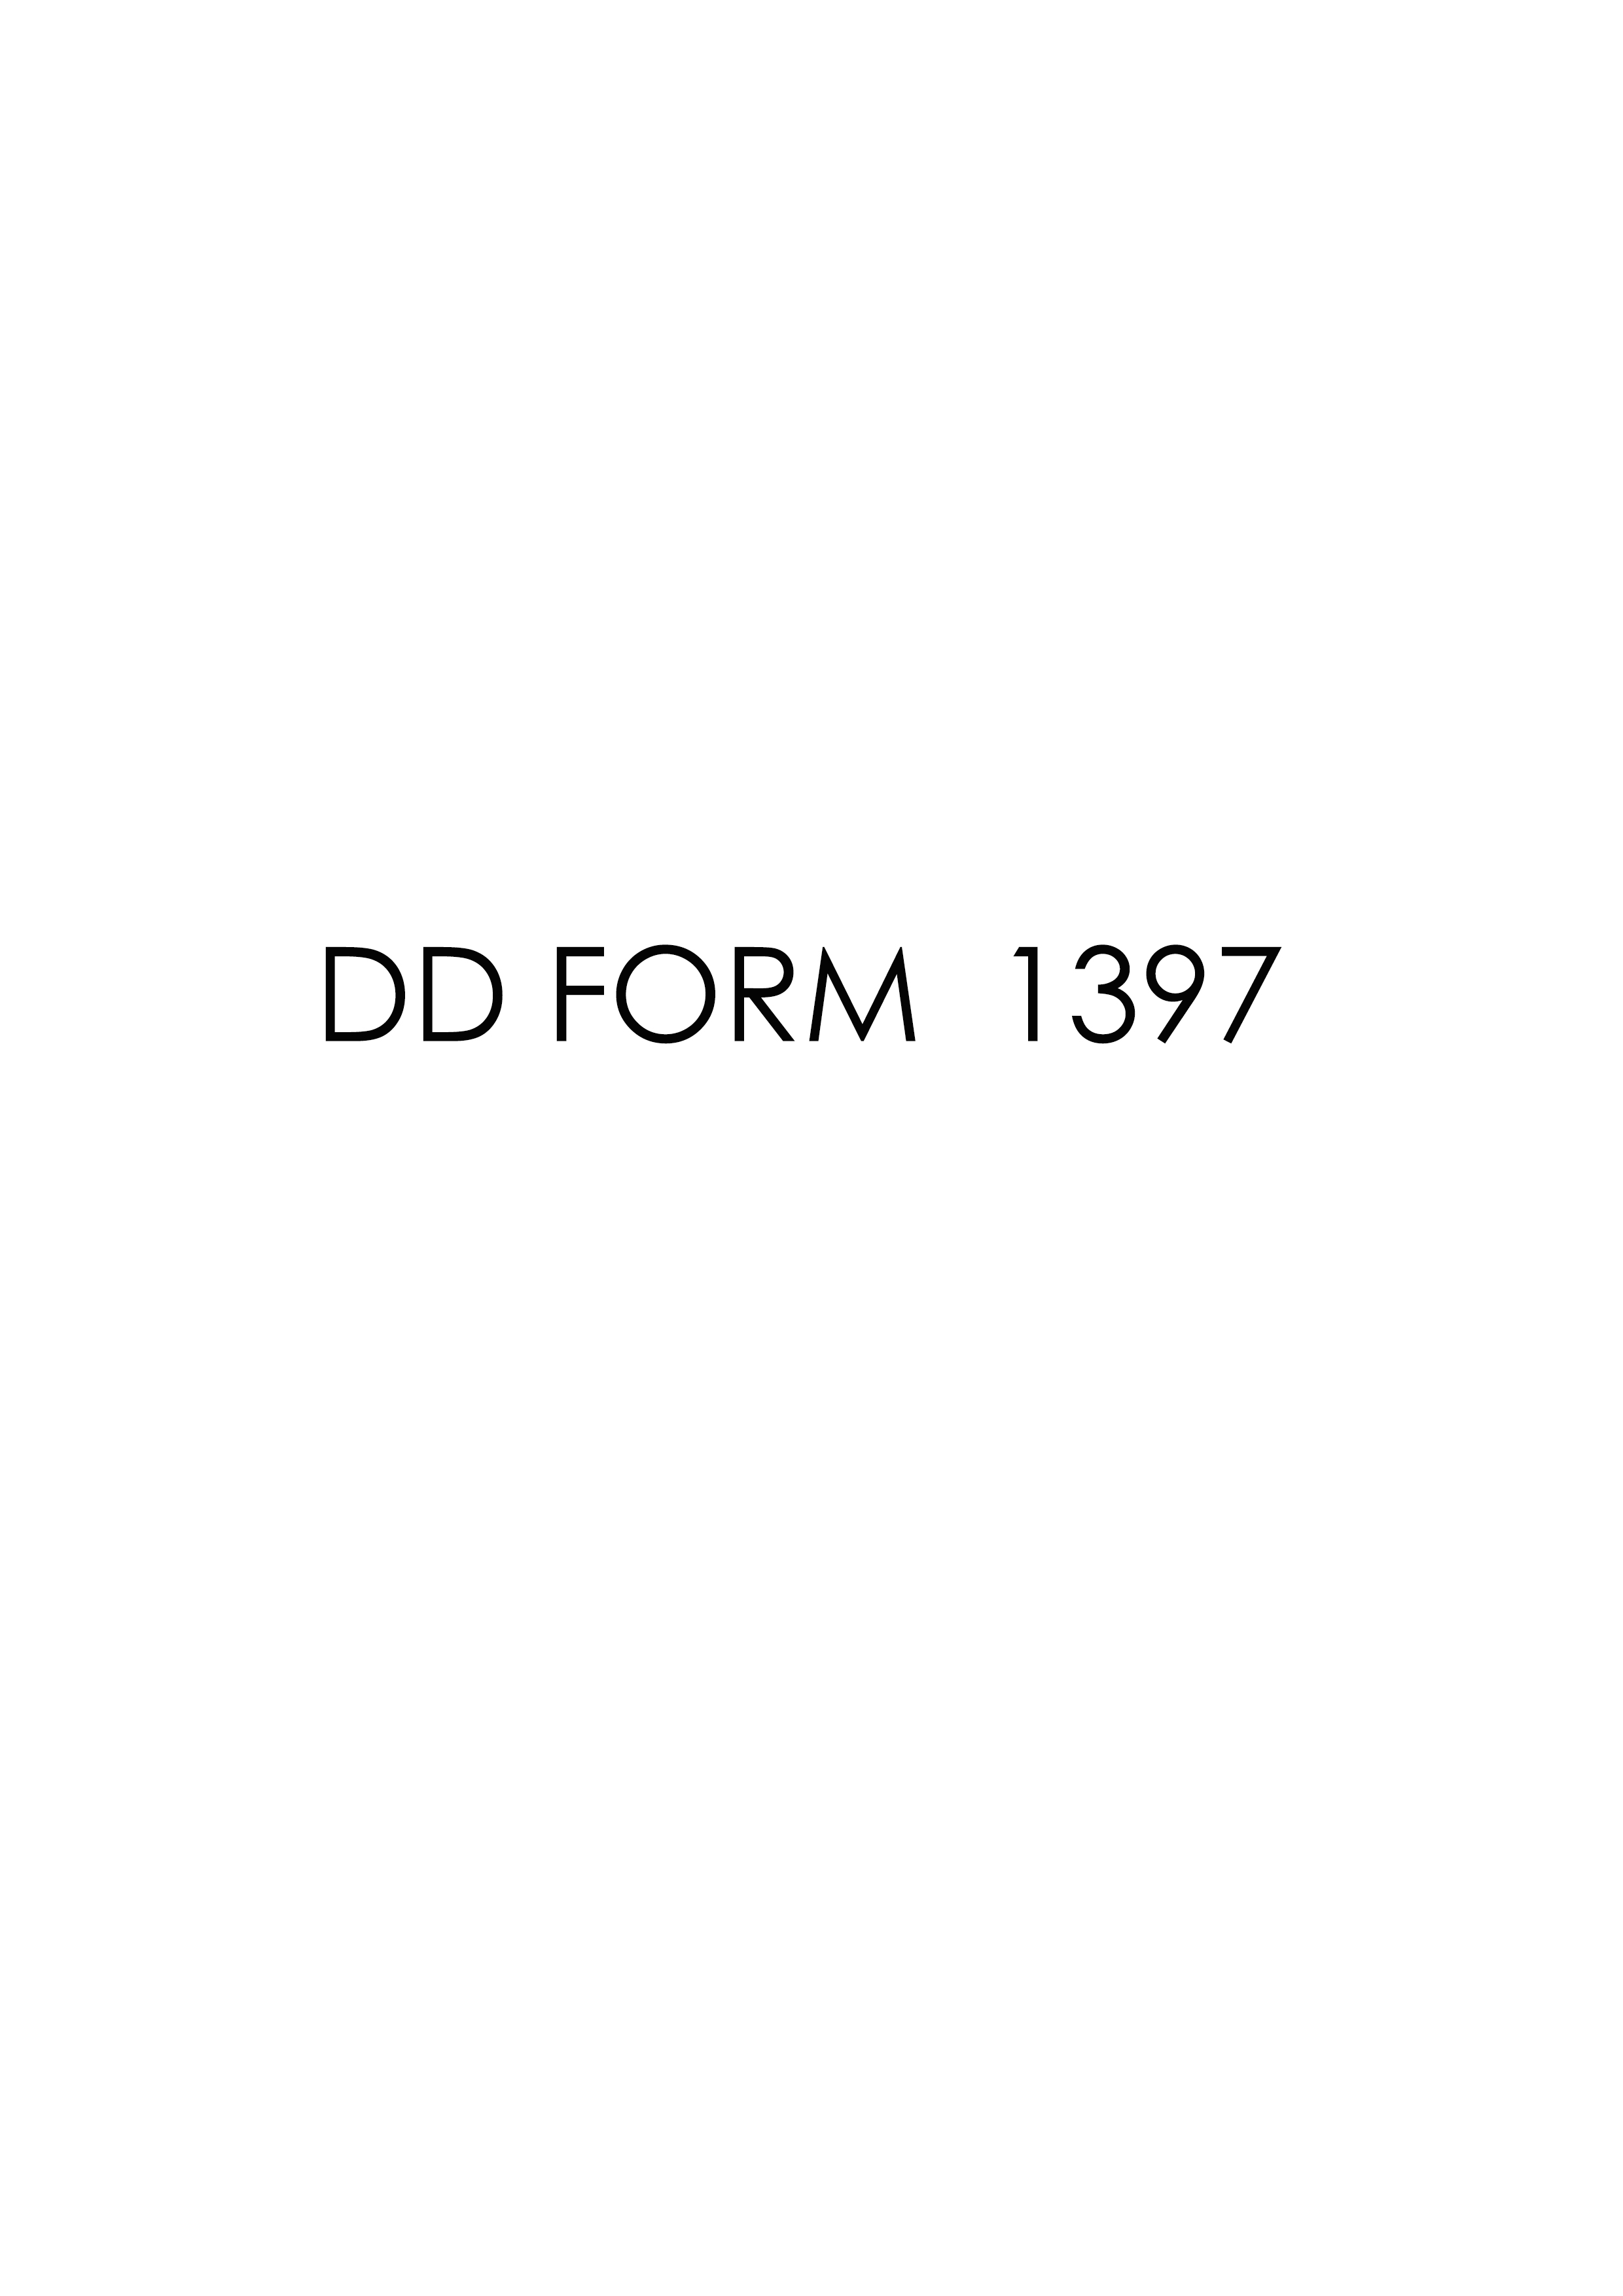 Download dd form 1397